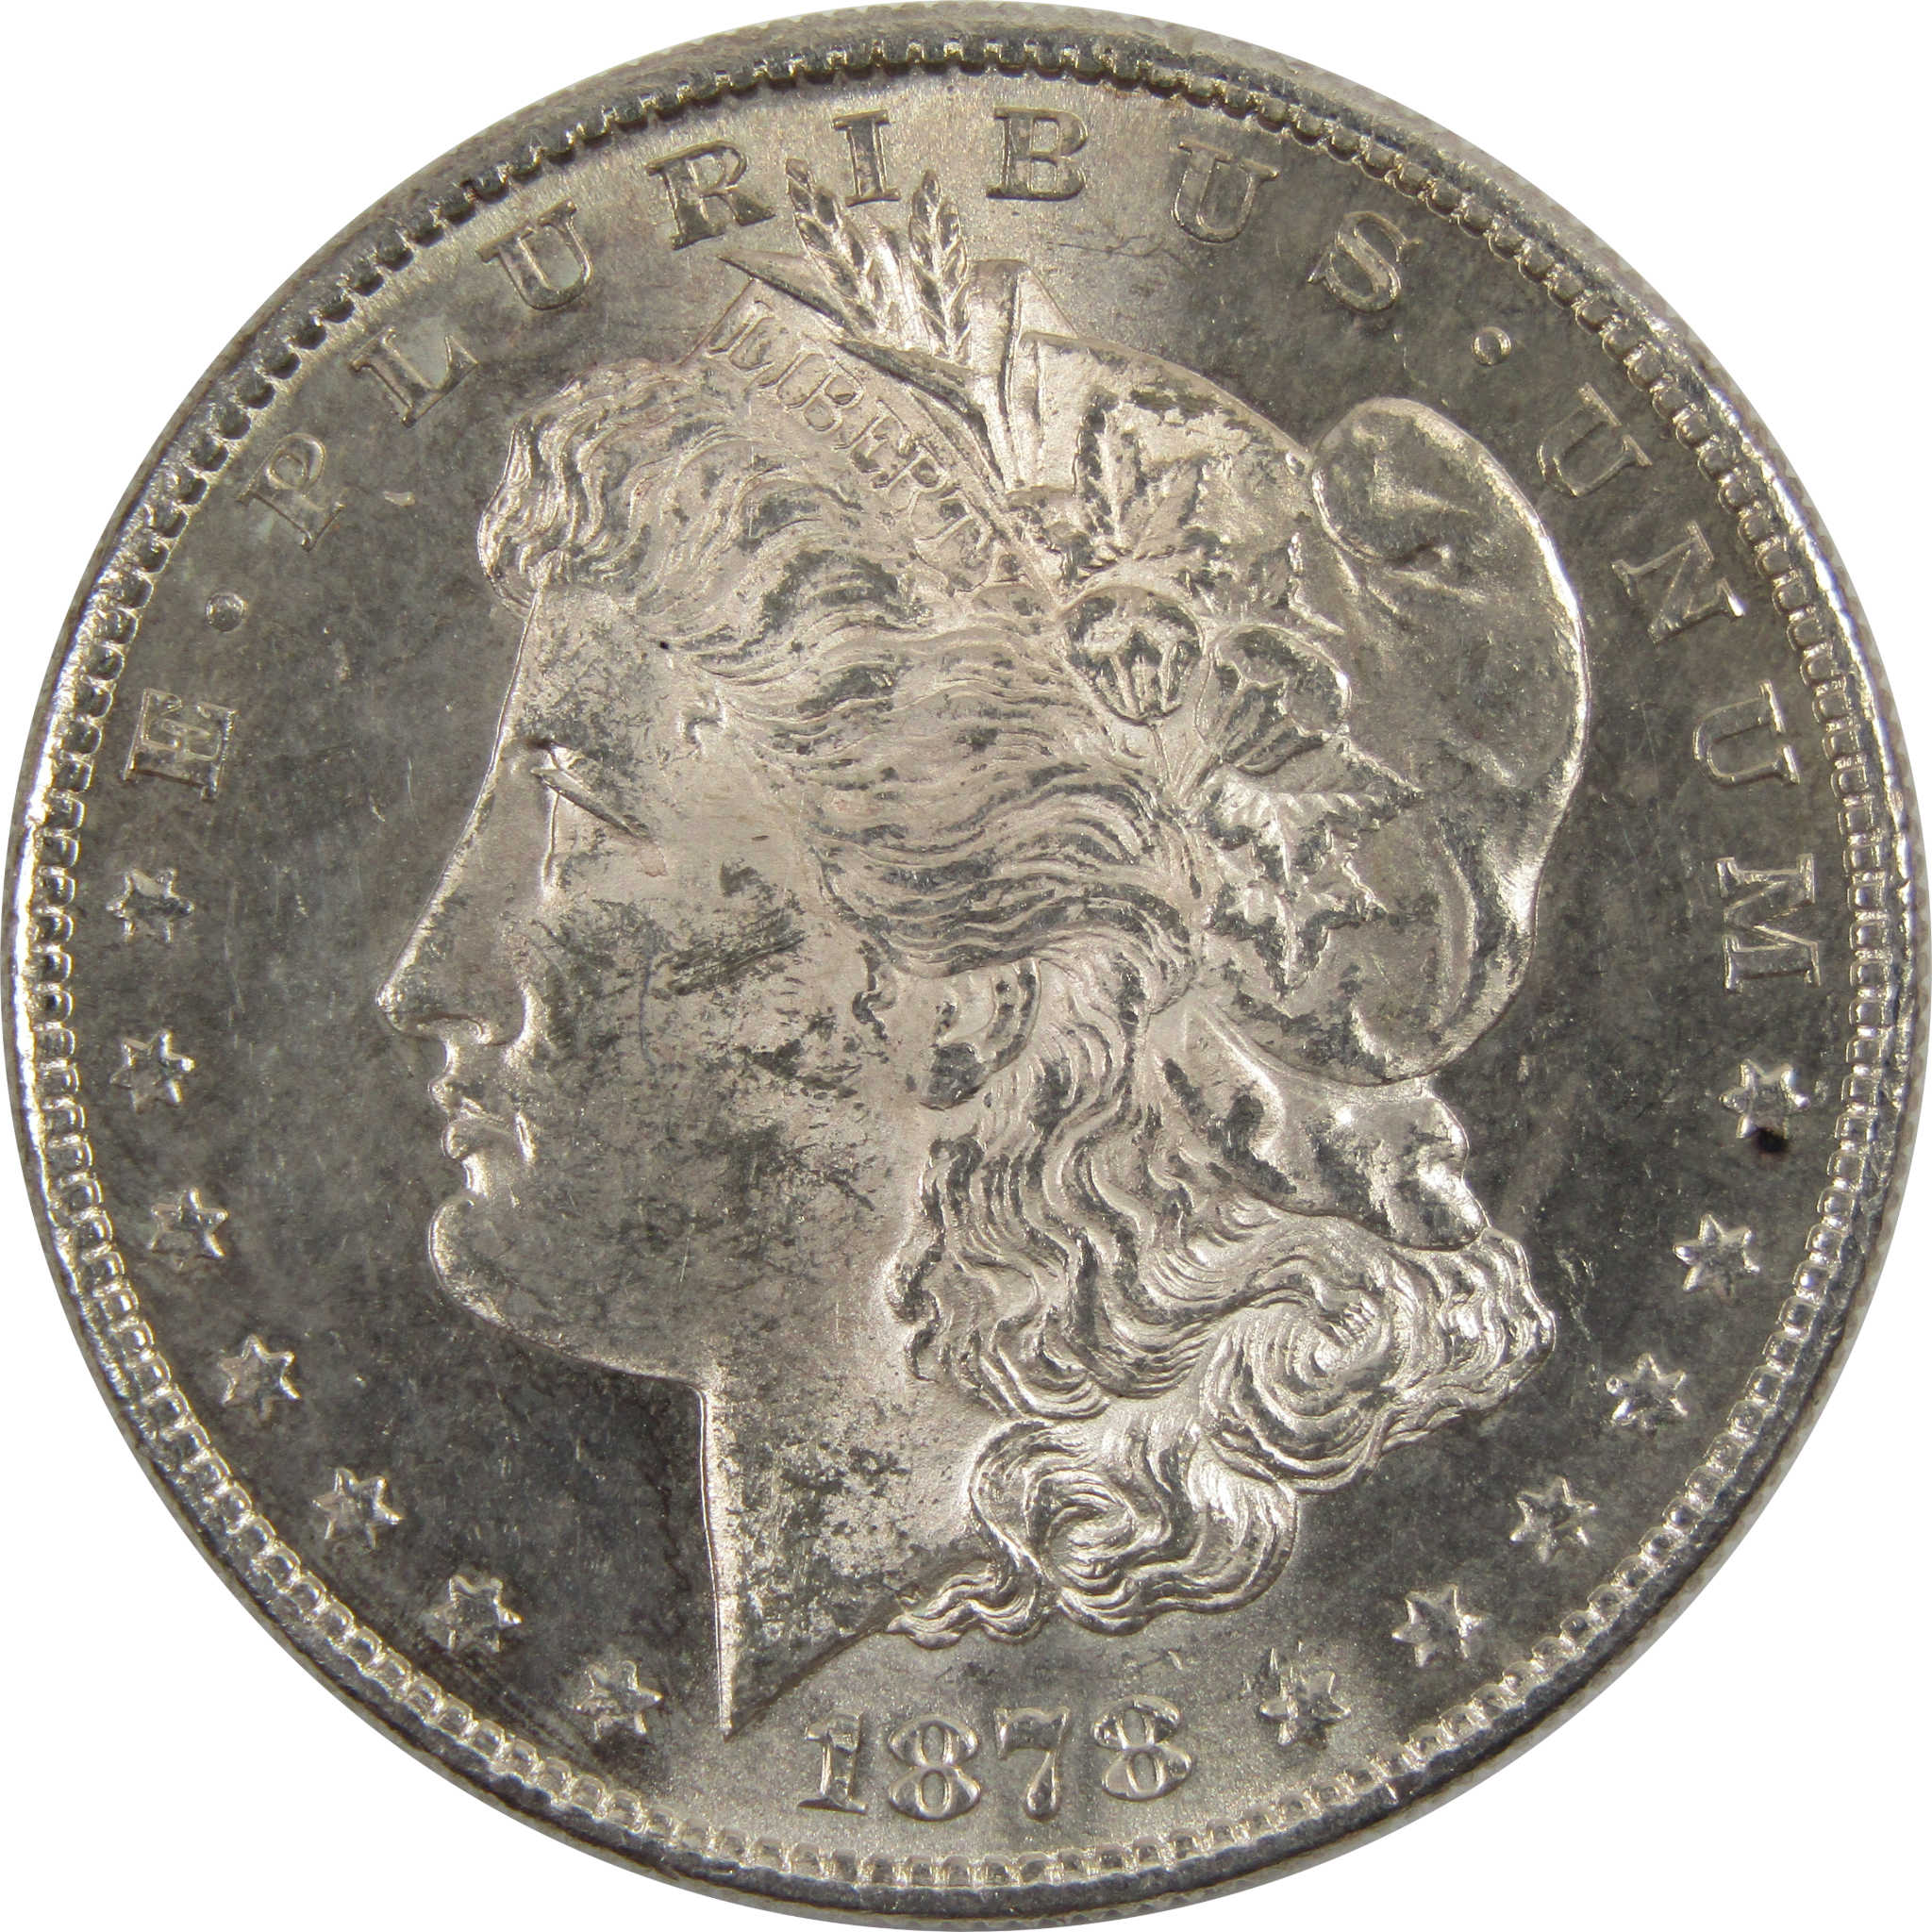 1878 S Morgan Dollar BU Uncirculated 90% Silver $1 Coin SKU:I8235 - Morgan coin - Morgan silver dollar - Morgan silver dollar for sale - Profile Coins &amp; Collectibles